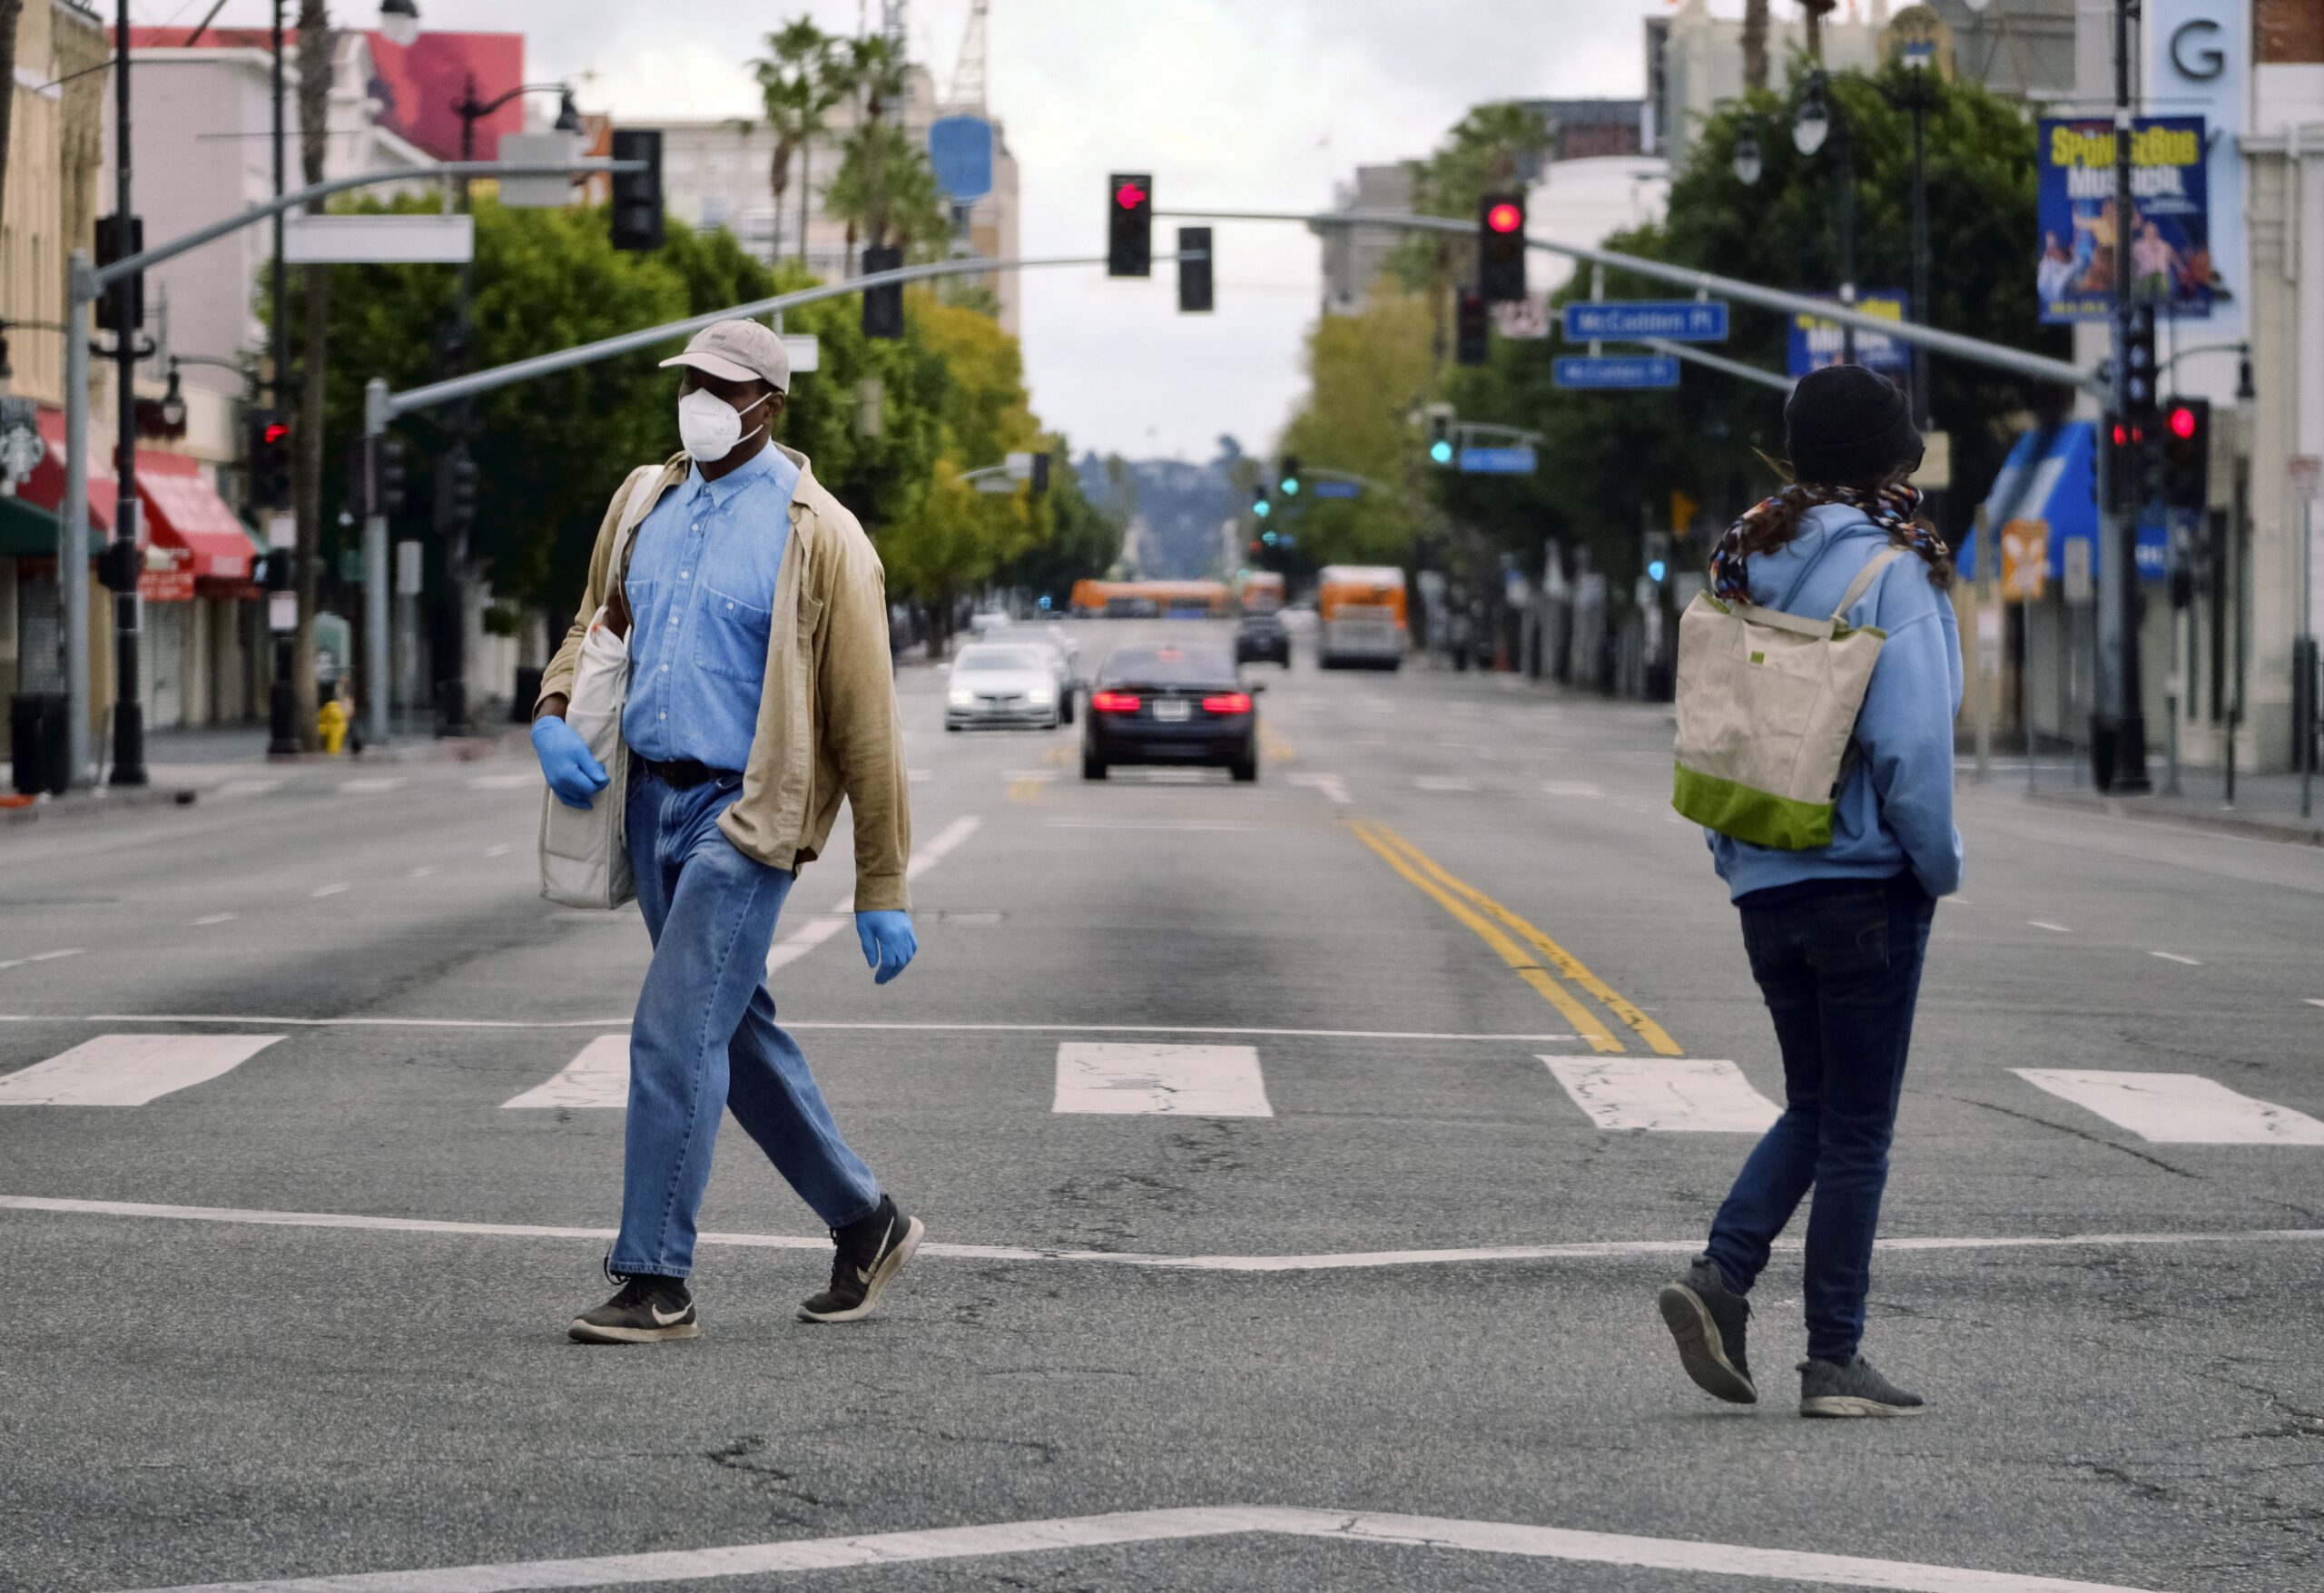 Pedestrians wearing protective masks